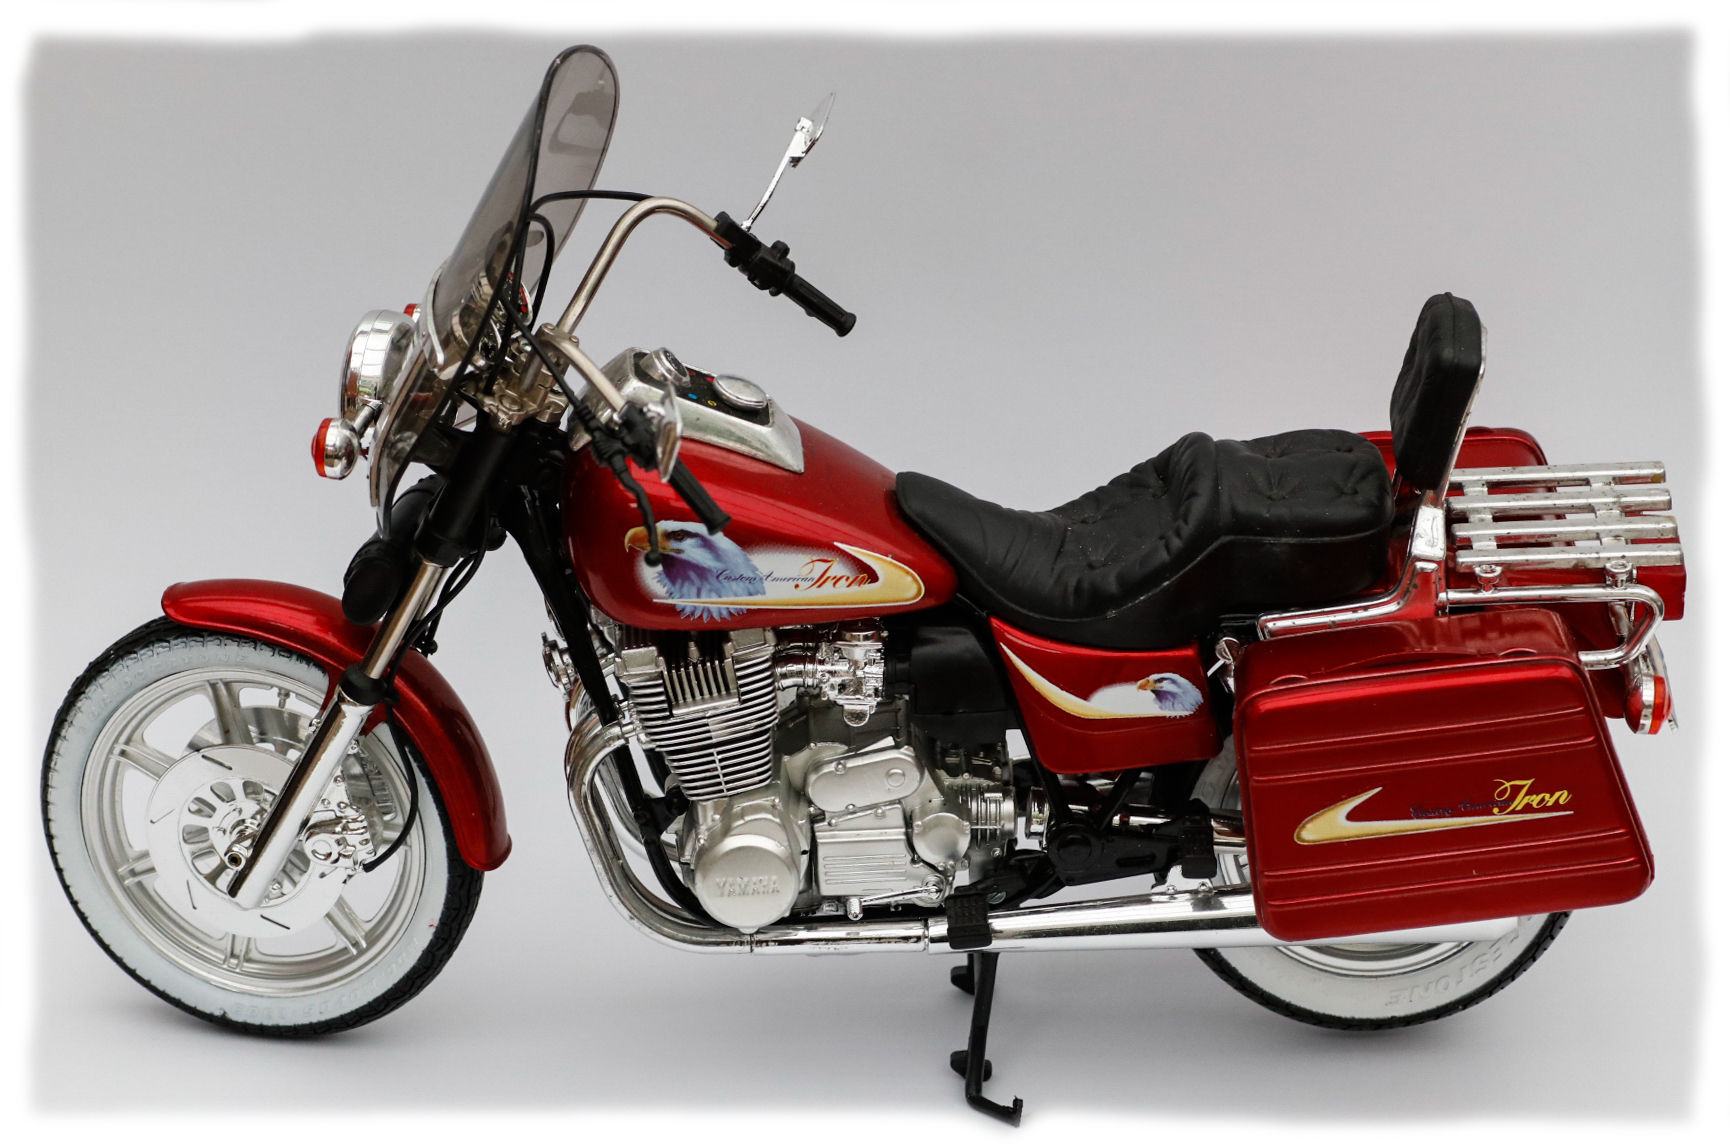 Guiloy Classic American Iron Yamaha XS1100